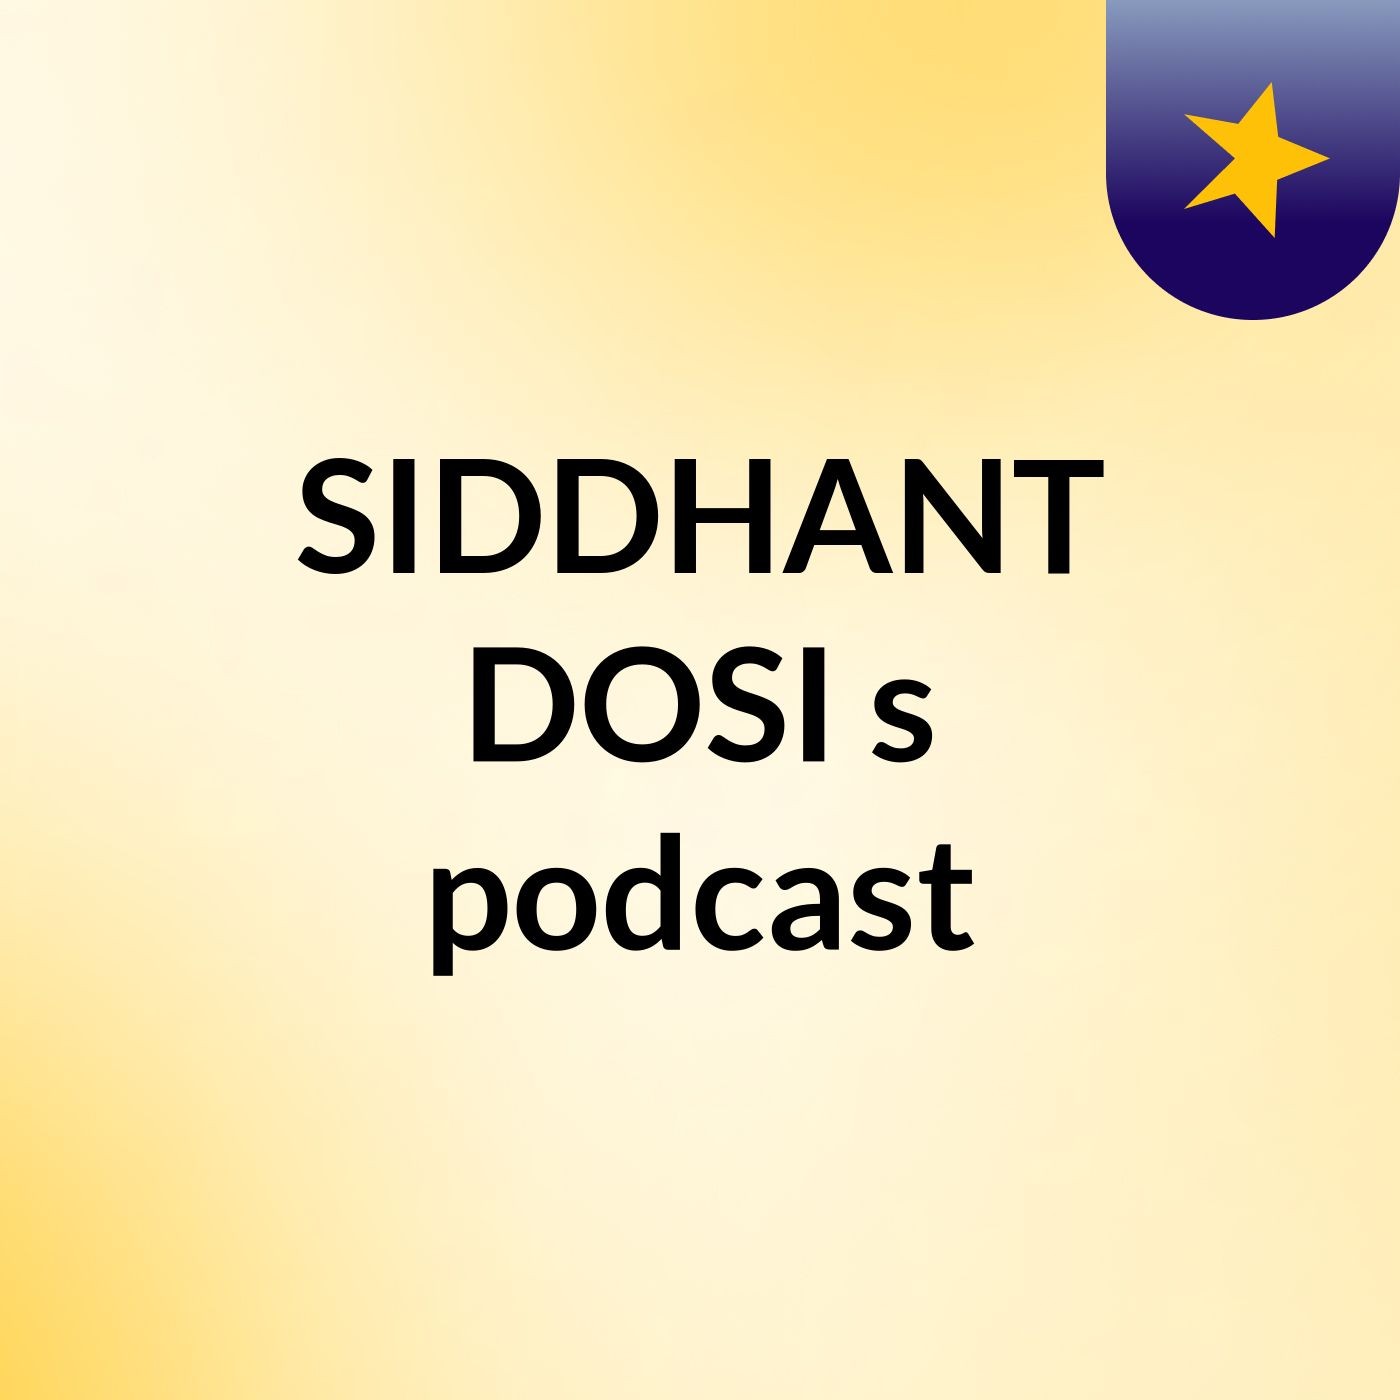 SIDDHANT DOSI's podcast